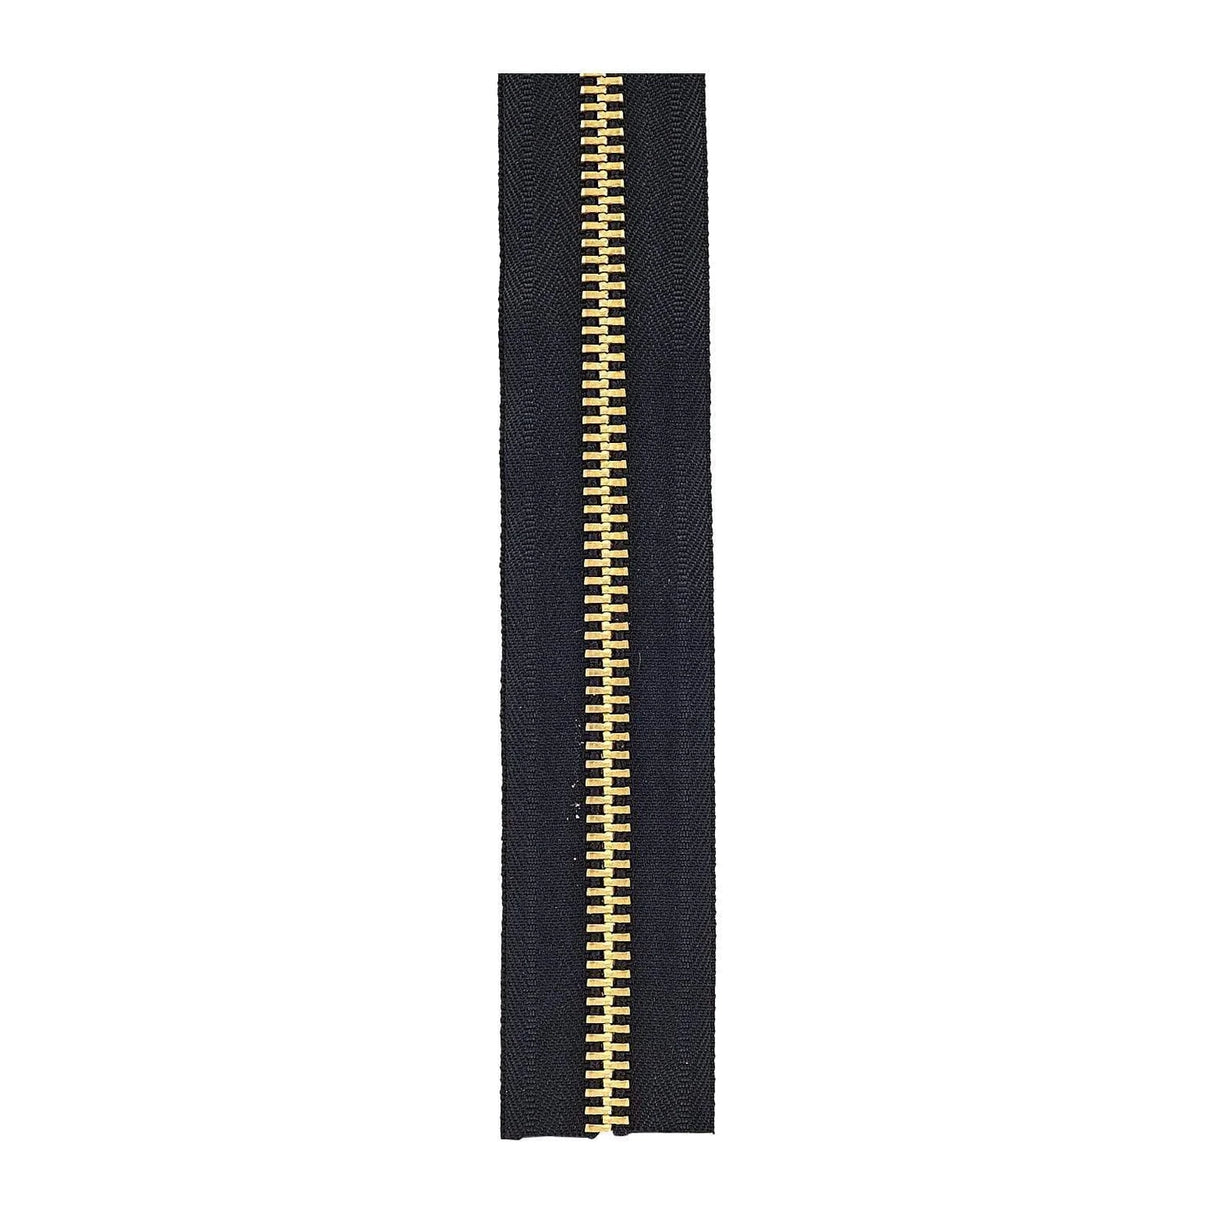 10 Black, YKK Metal Chain Zipper Tape with Brass Teeth, #10M-BLK-B